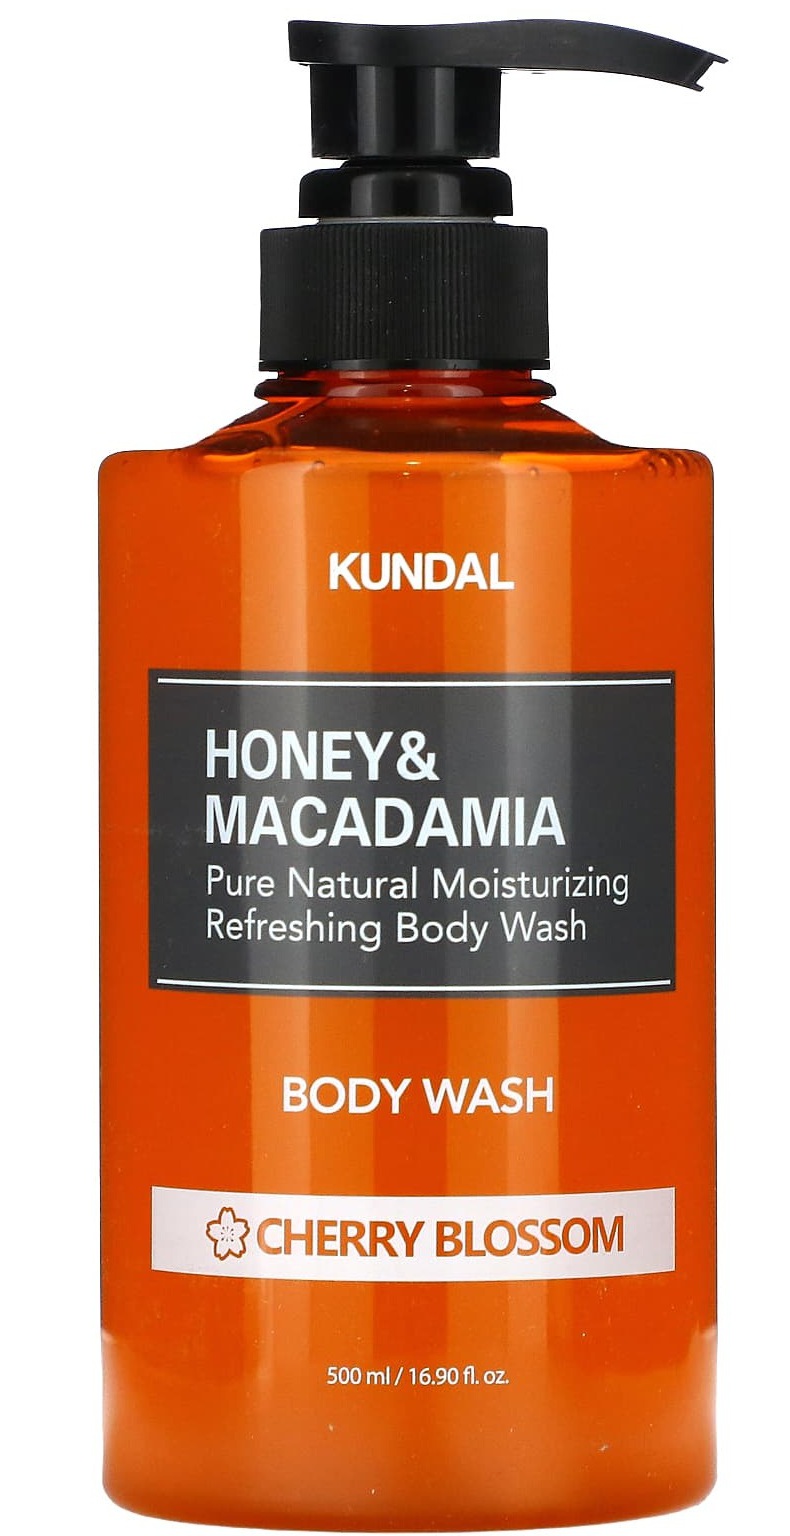 Kundal Honey & Macadamia, Body Wash, Cherry Blossom